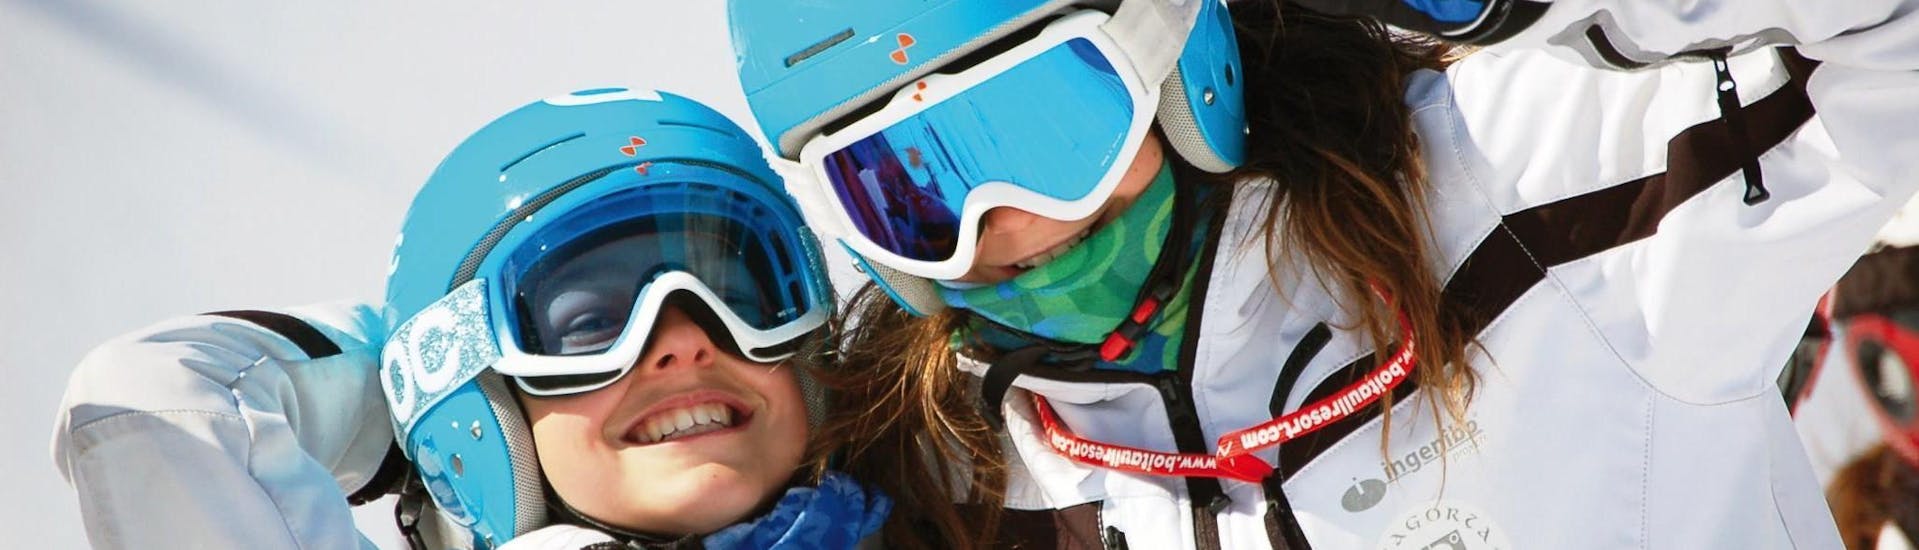 kids-ski-lessons-for-all-levels-escola-val-de-boi-hero-1